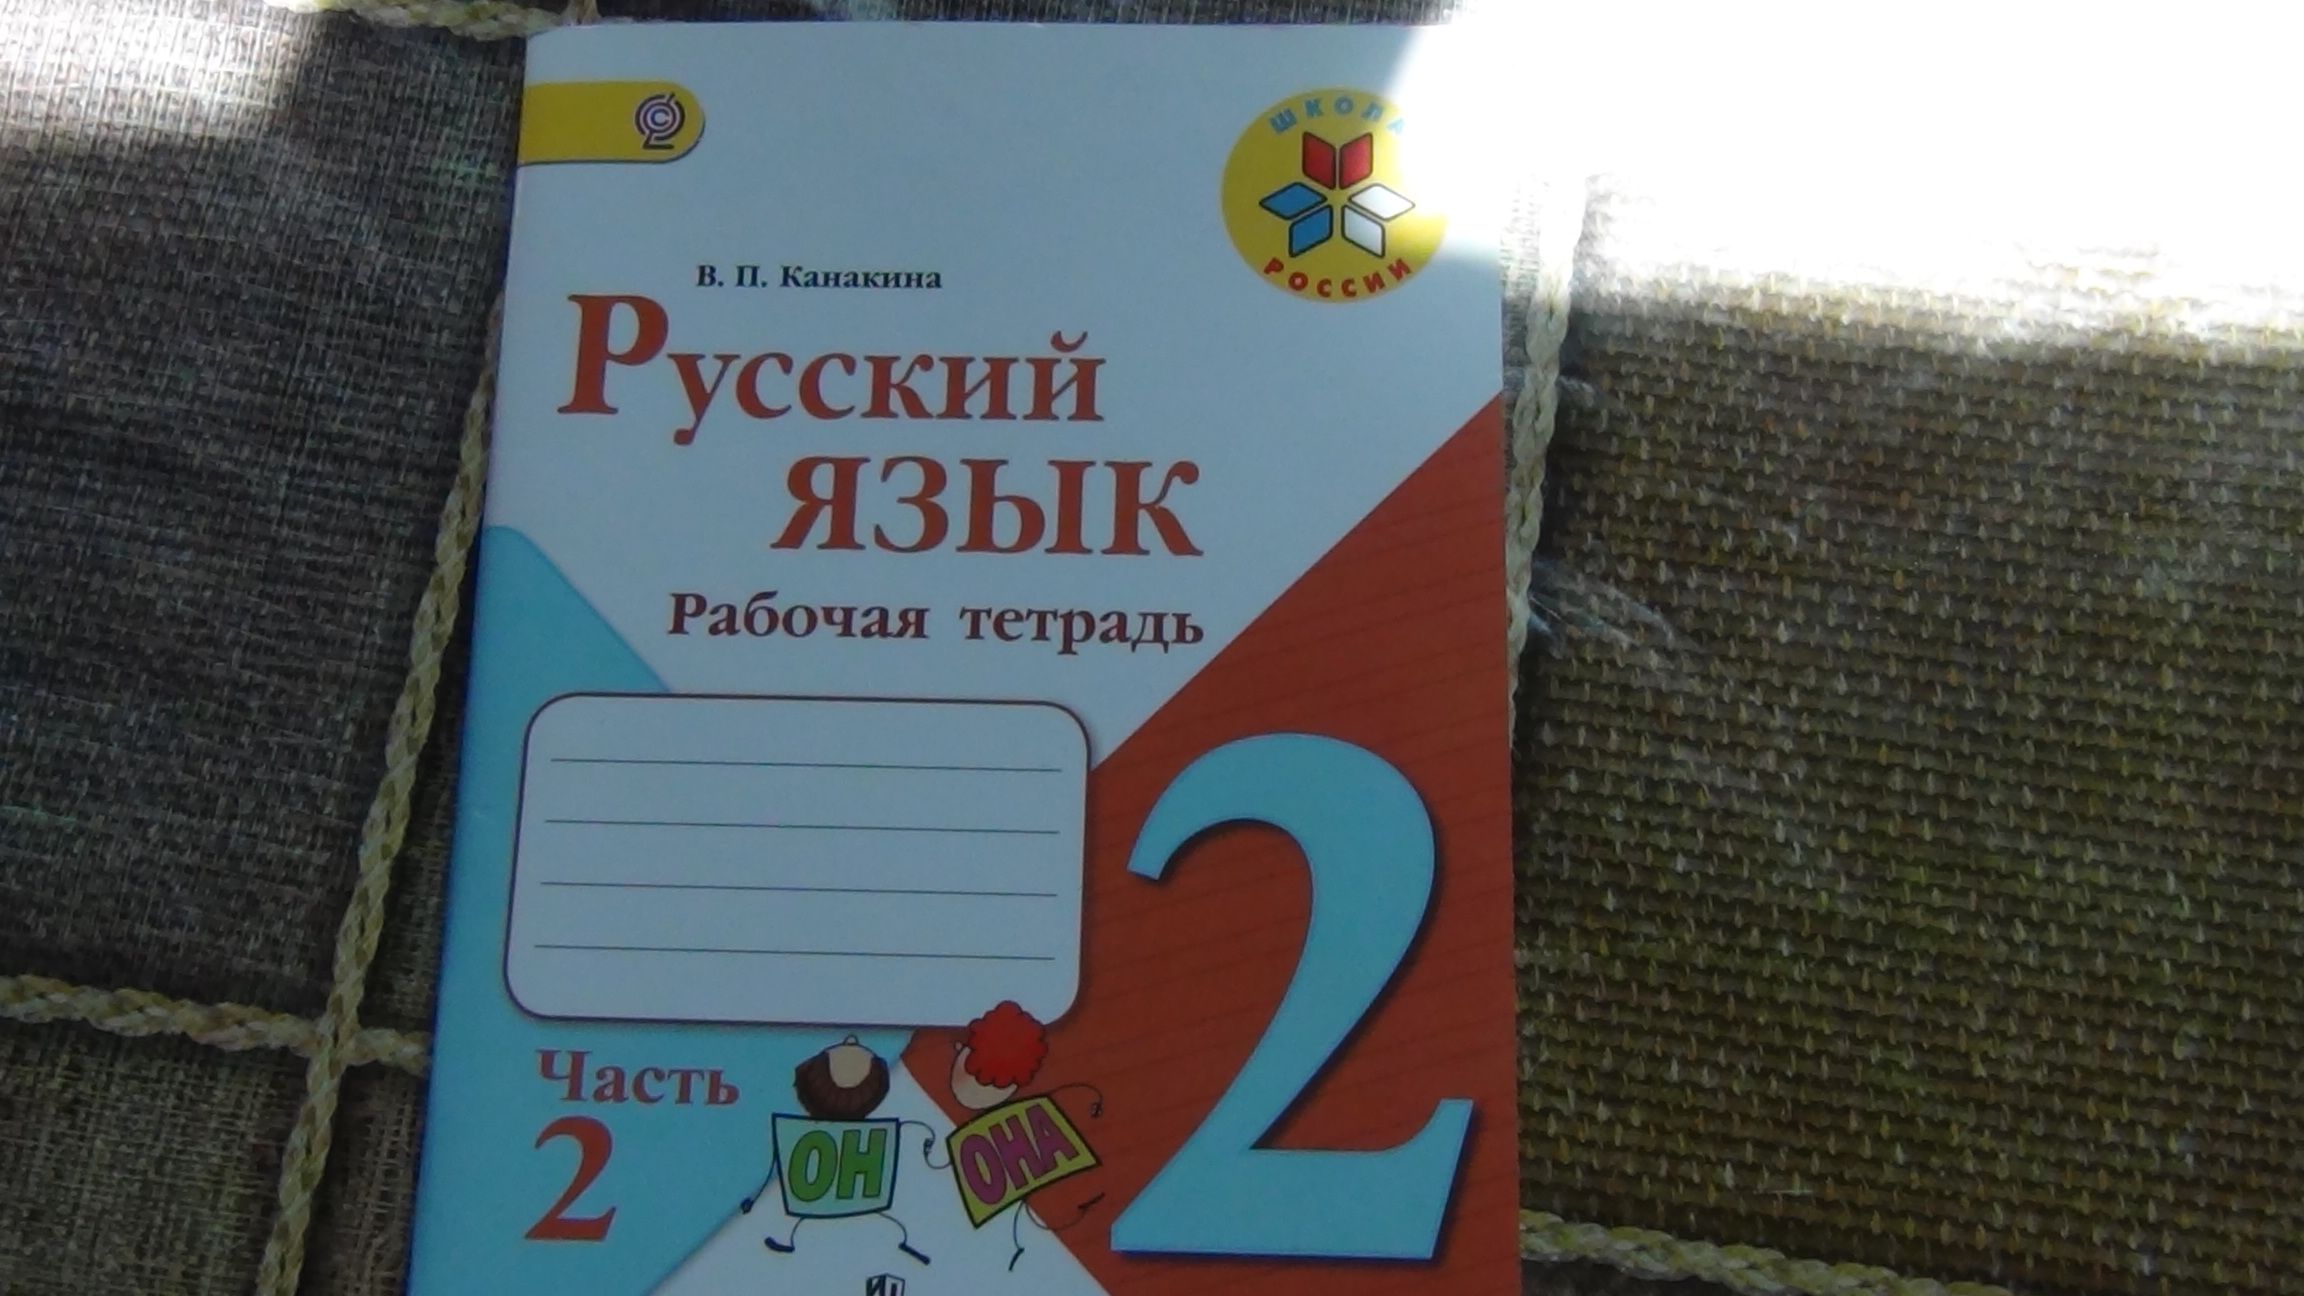 Русский язык рабочая тетрадь Канакина